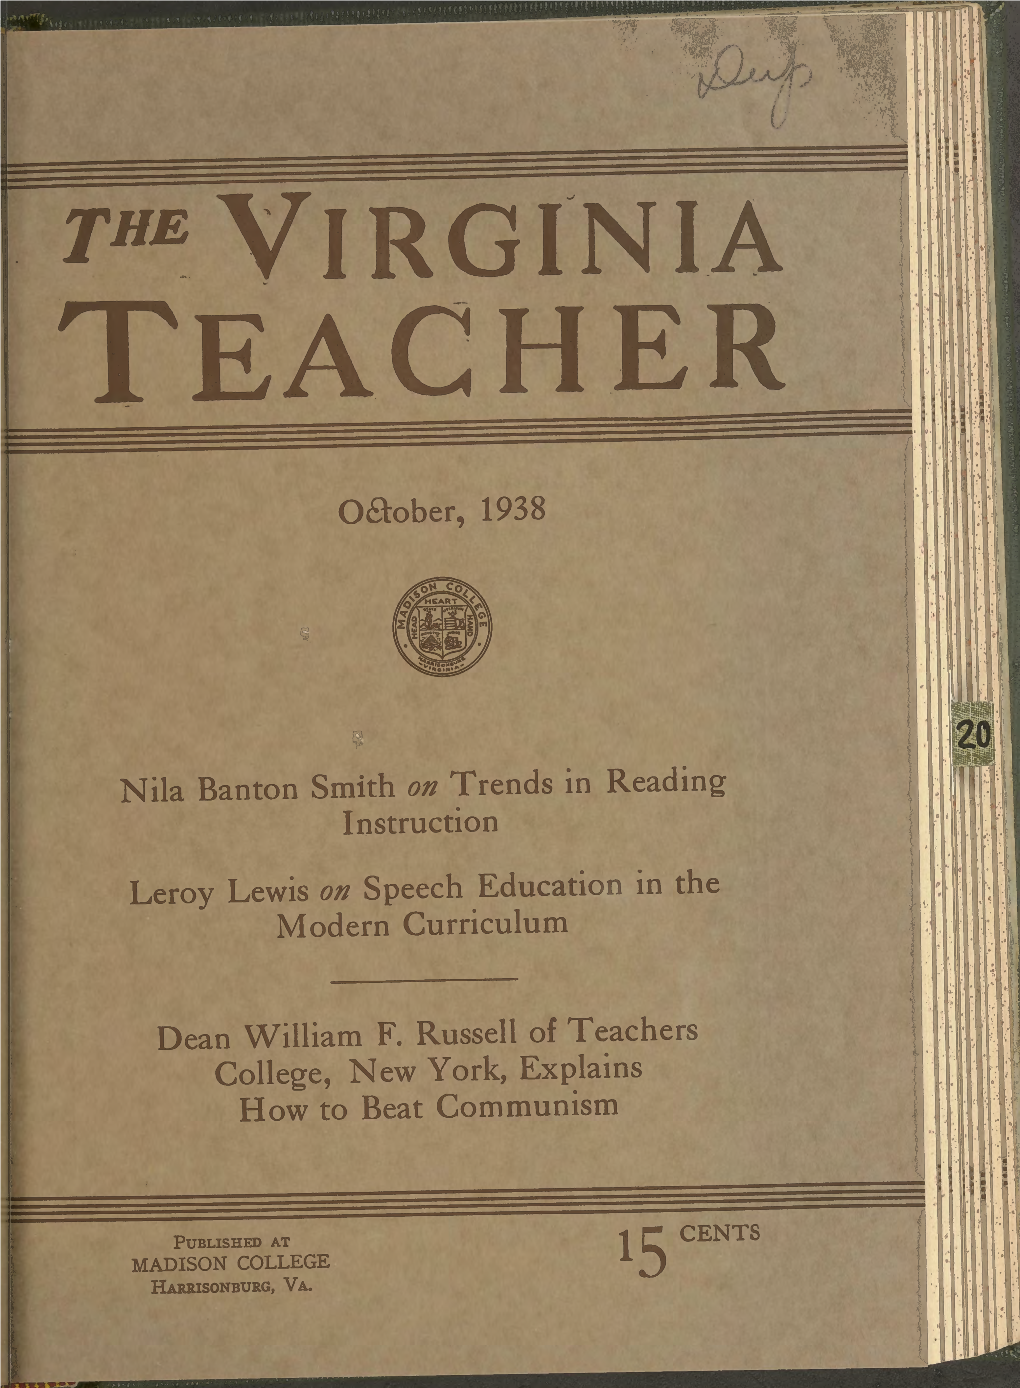 The Virginia Teacher, Vol. 19, Iss. 7, October 1938